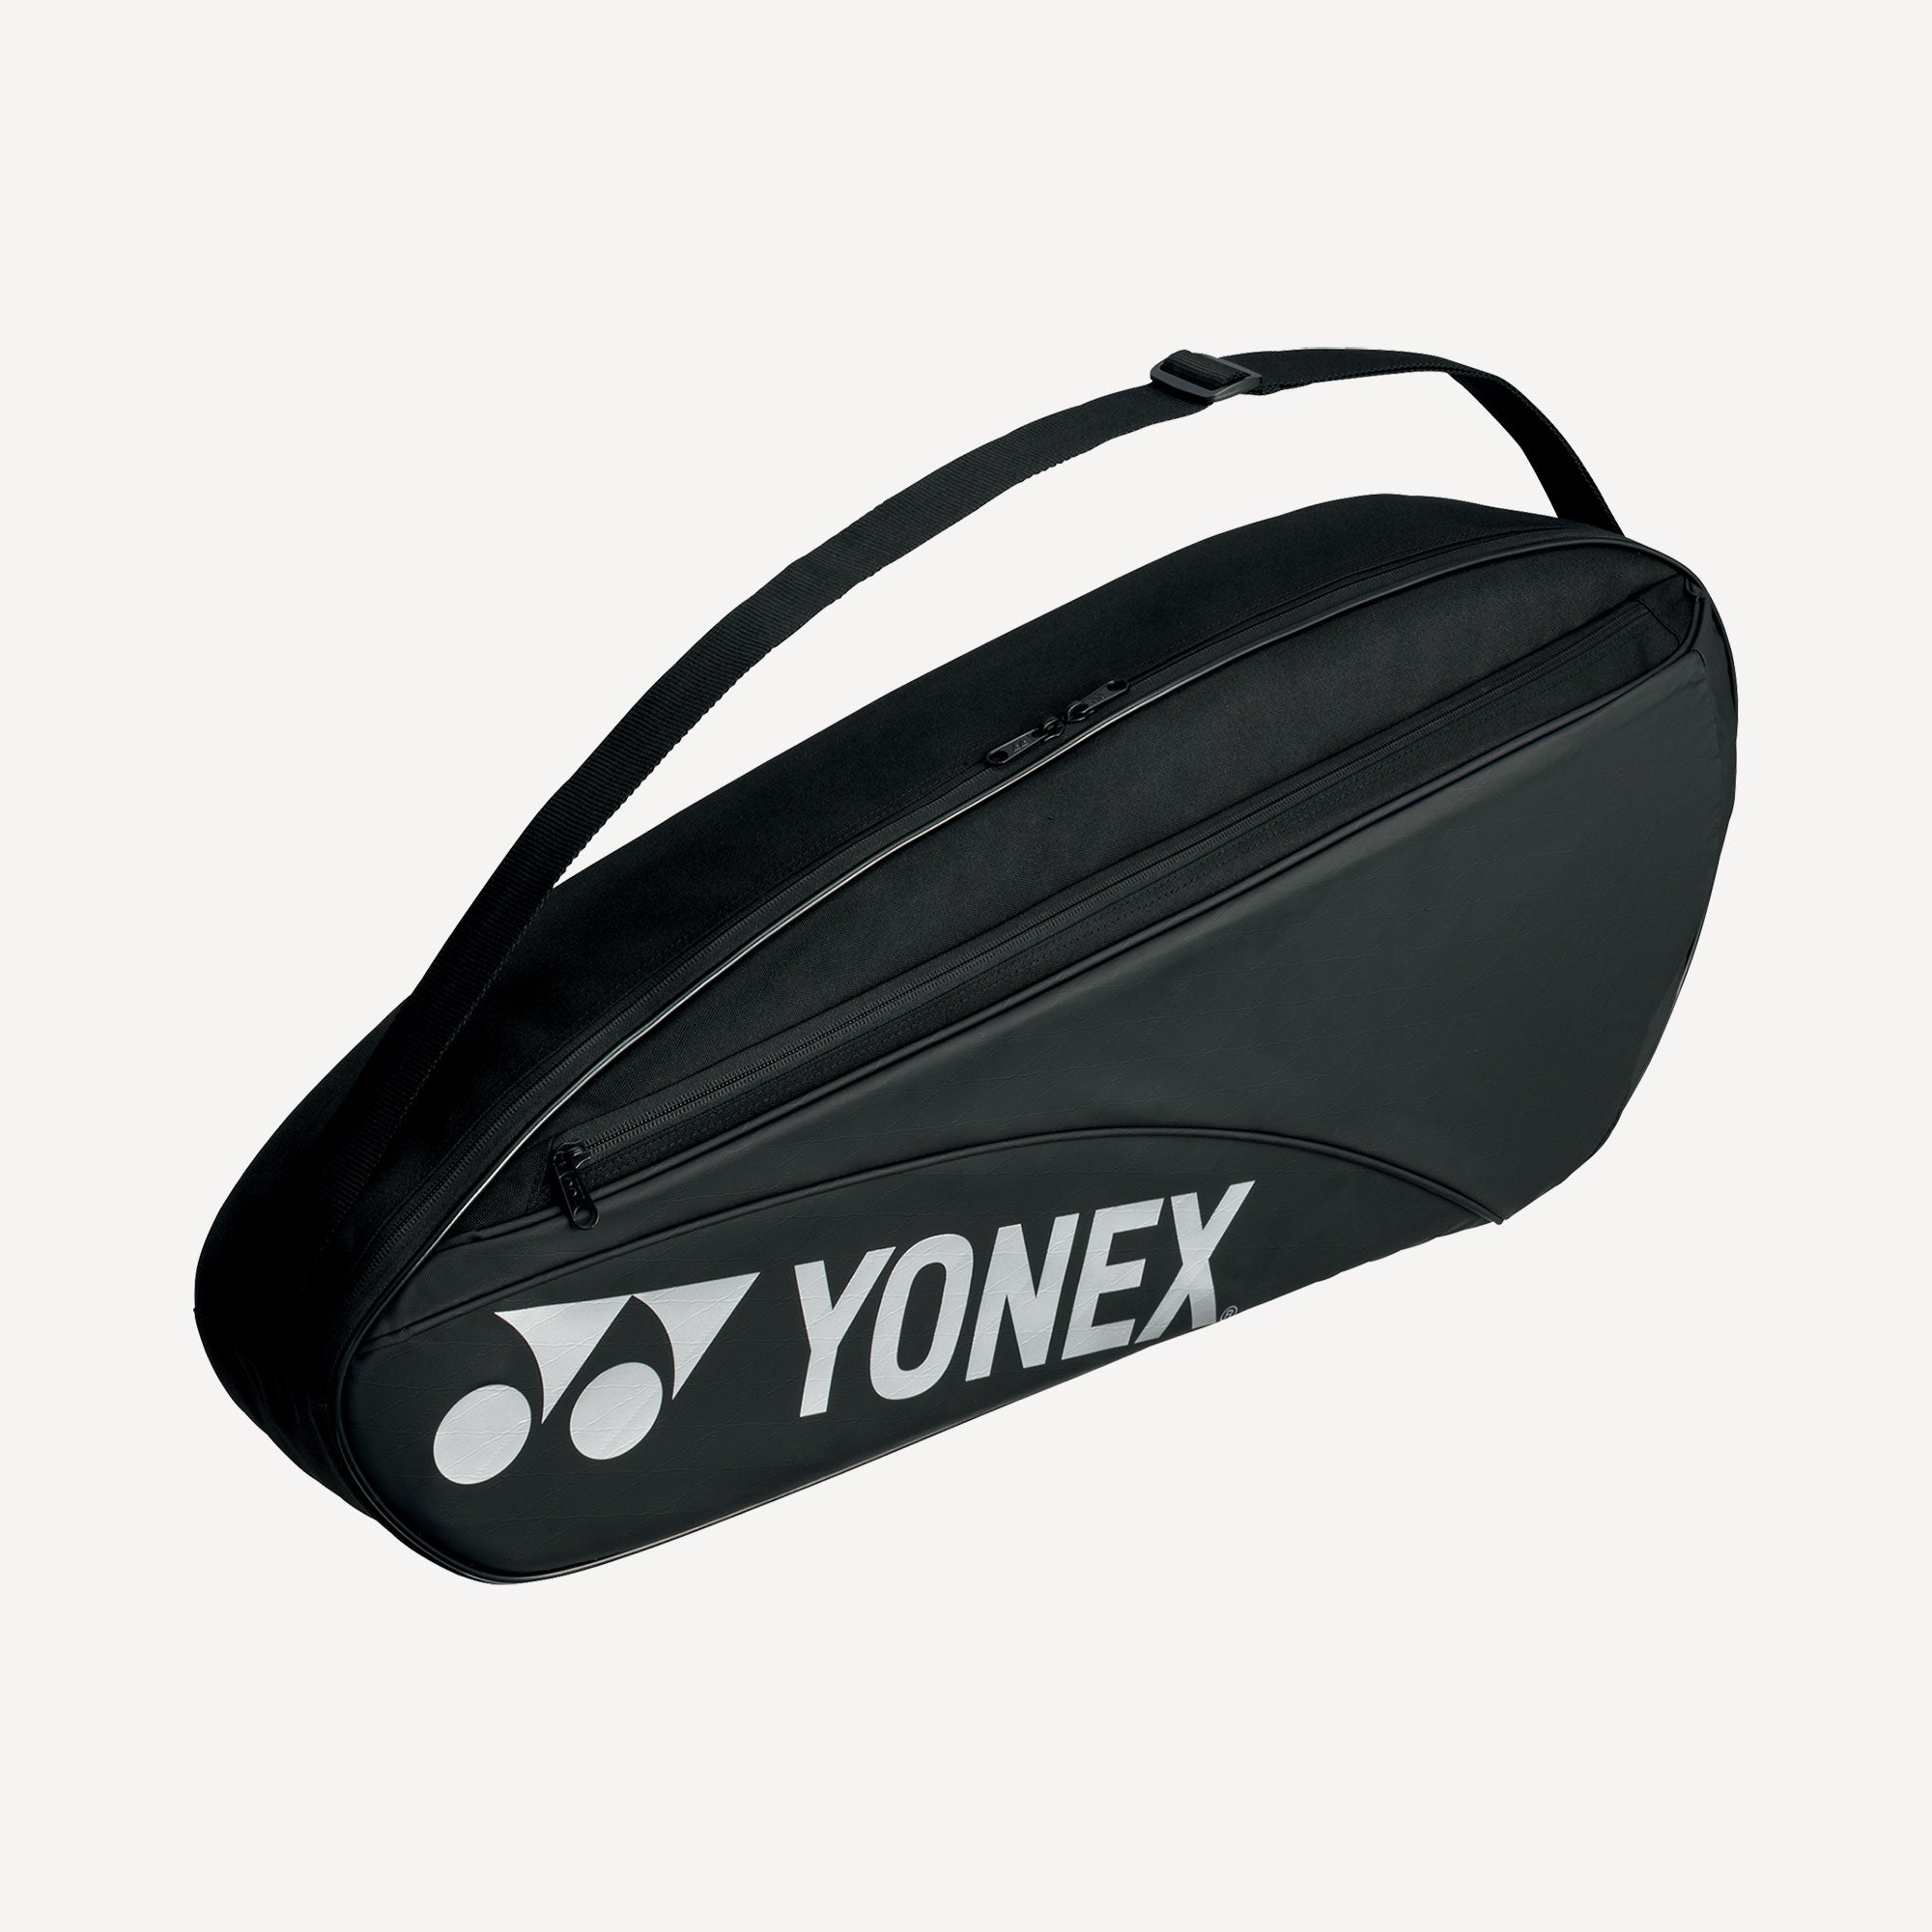 Yonex Team 3 Racket Tennis Bag - Black (1)